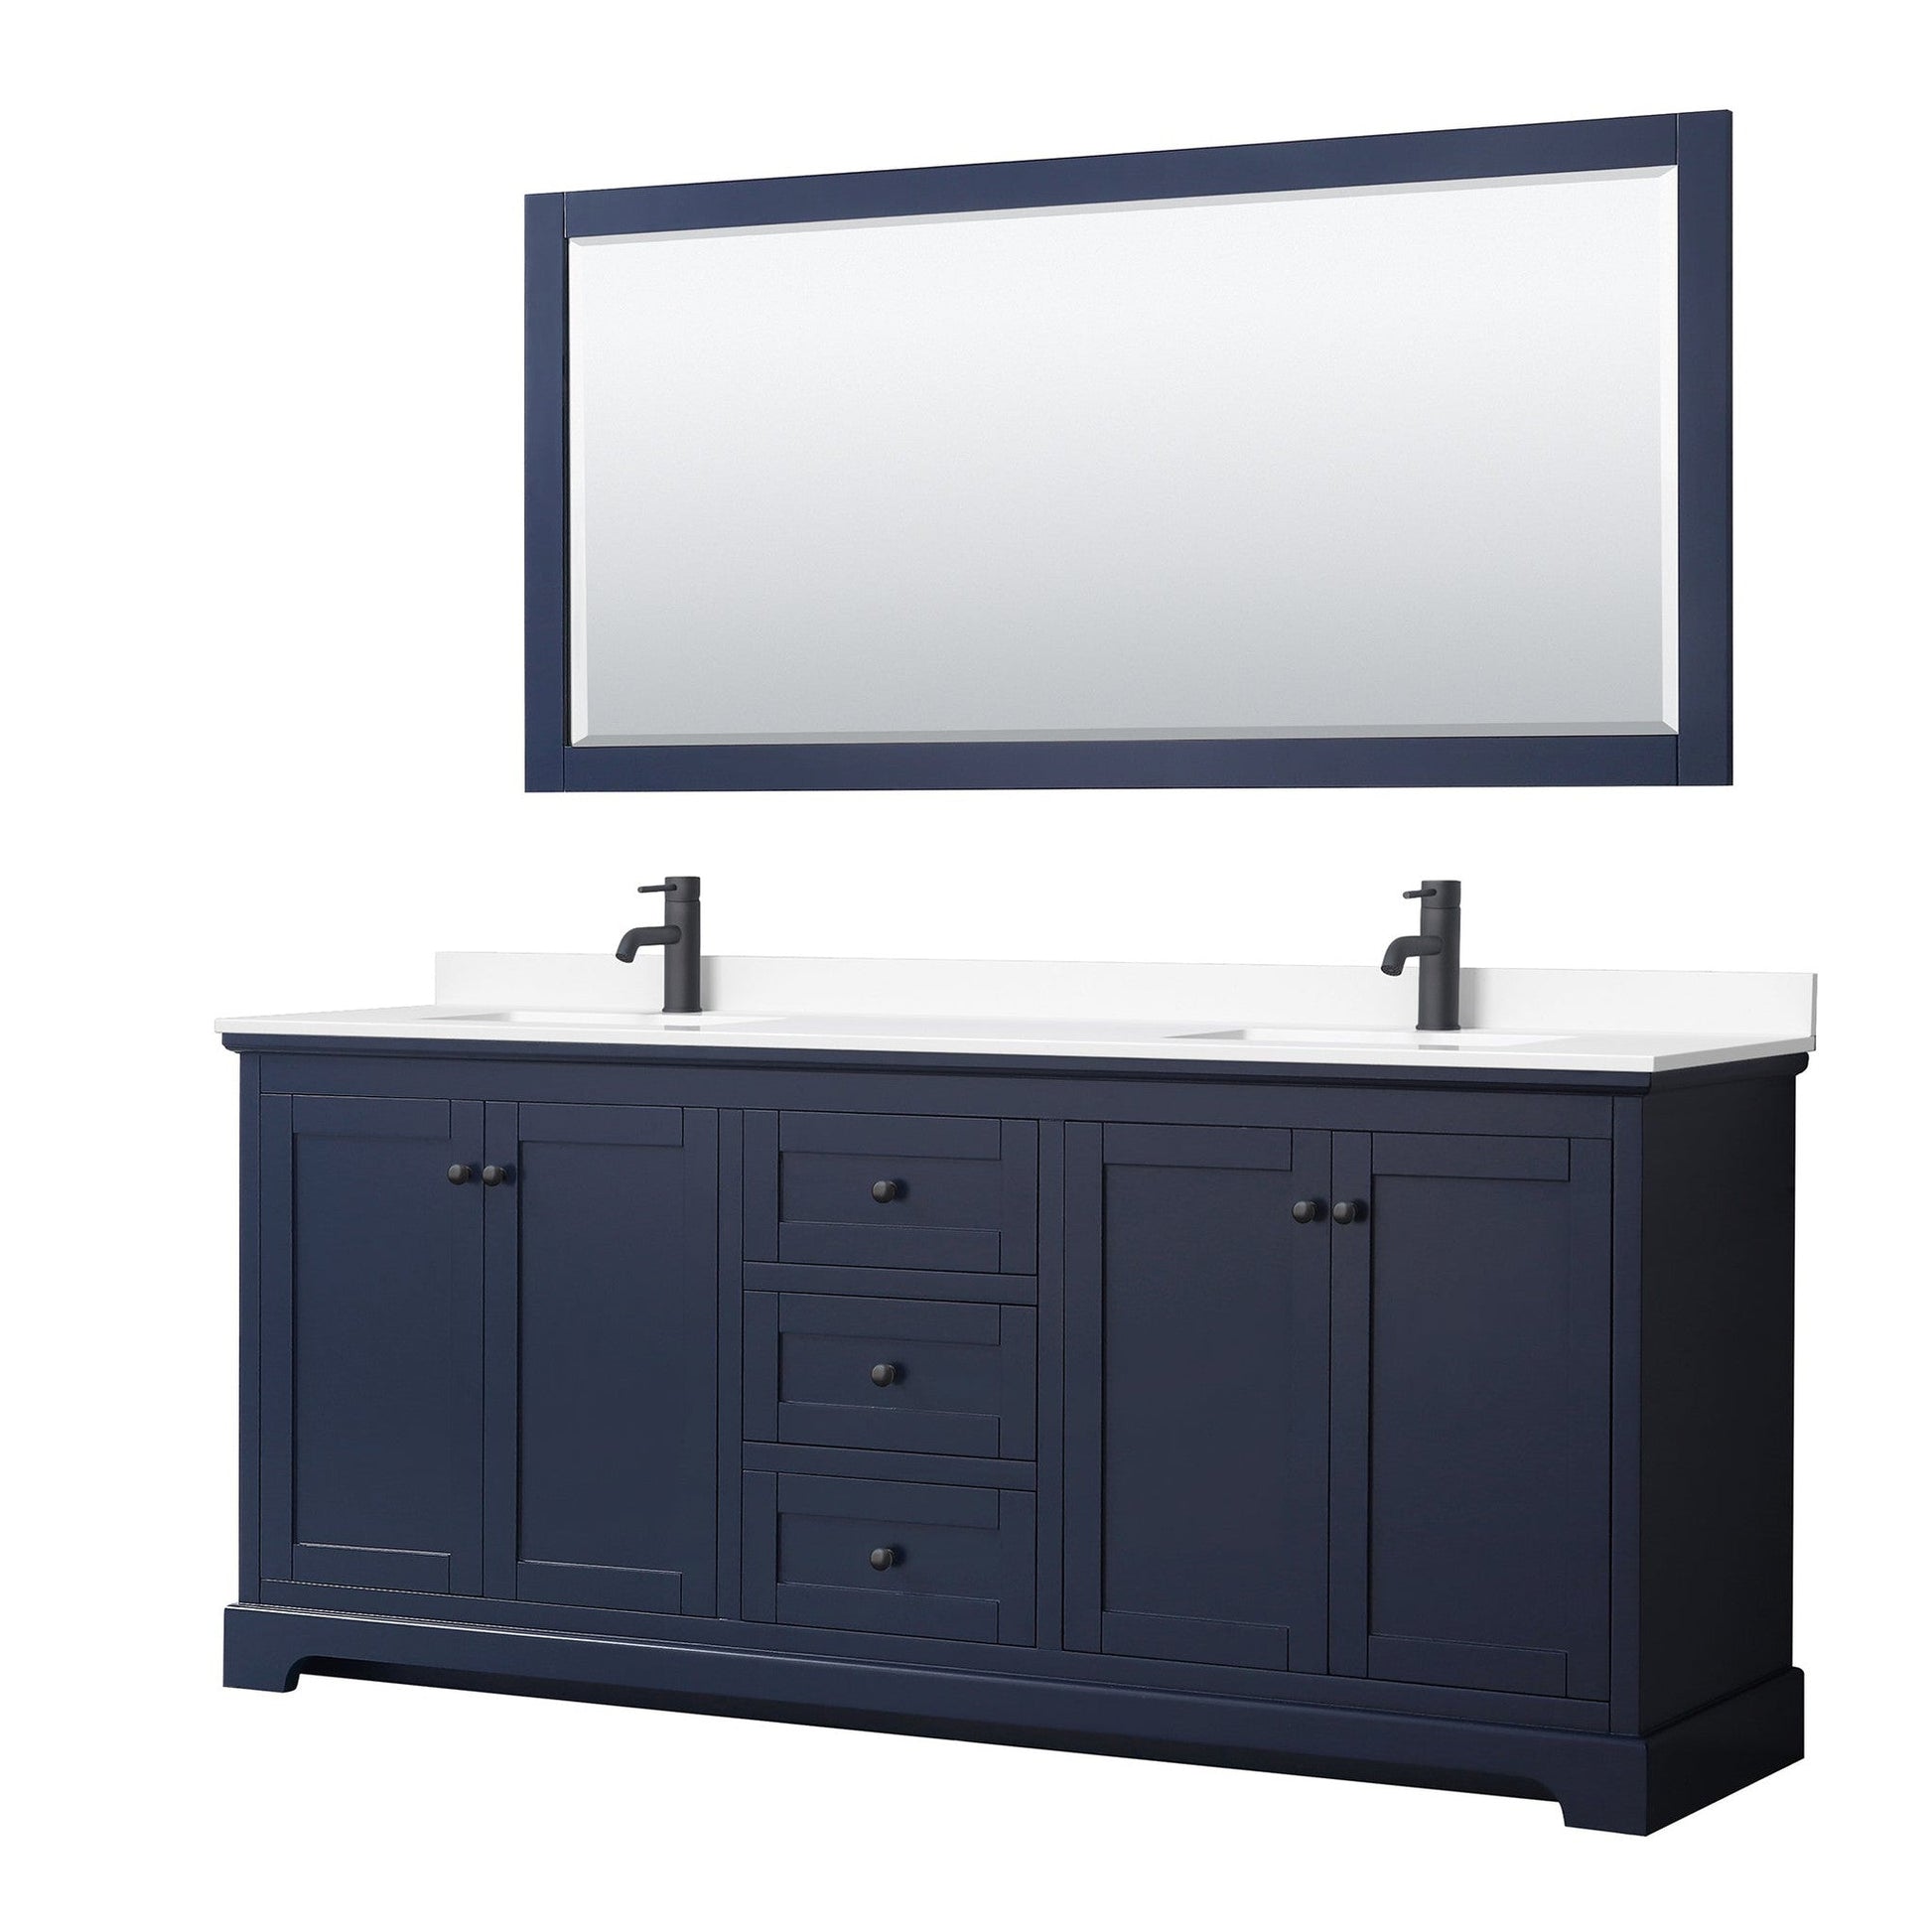 Avery 80" Double Bathroom Vanity in Dark Blue, White Cultured Marble Countertop, Undermount Square Sinks, Matte Black Trim, 70" Mirror